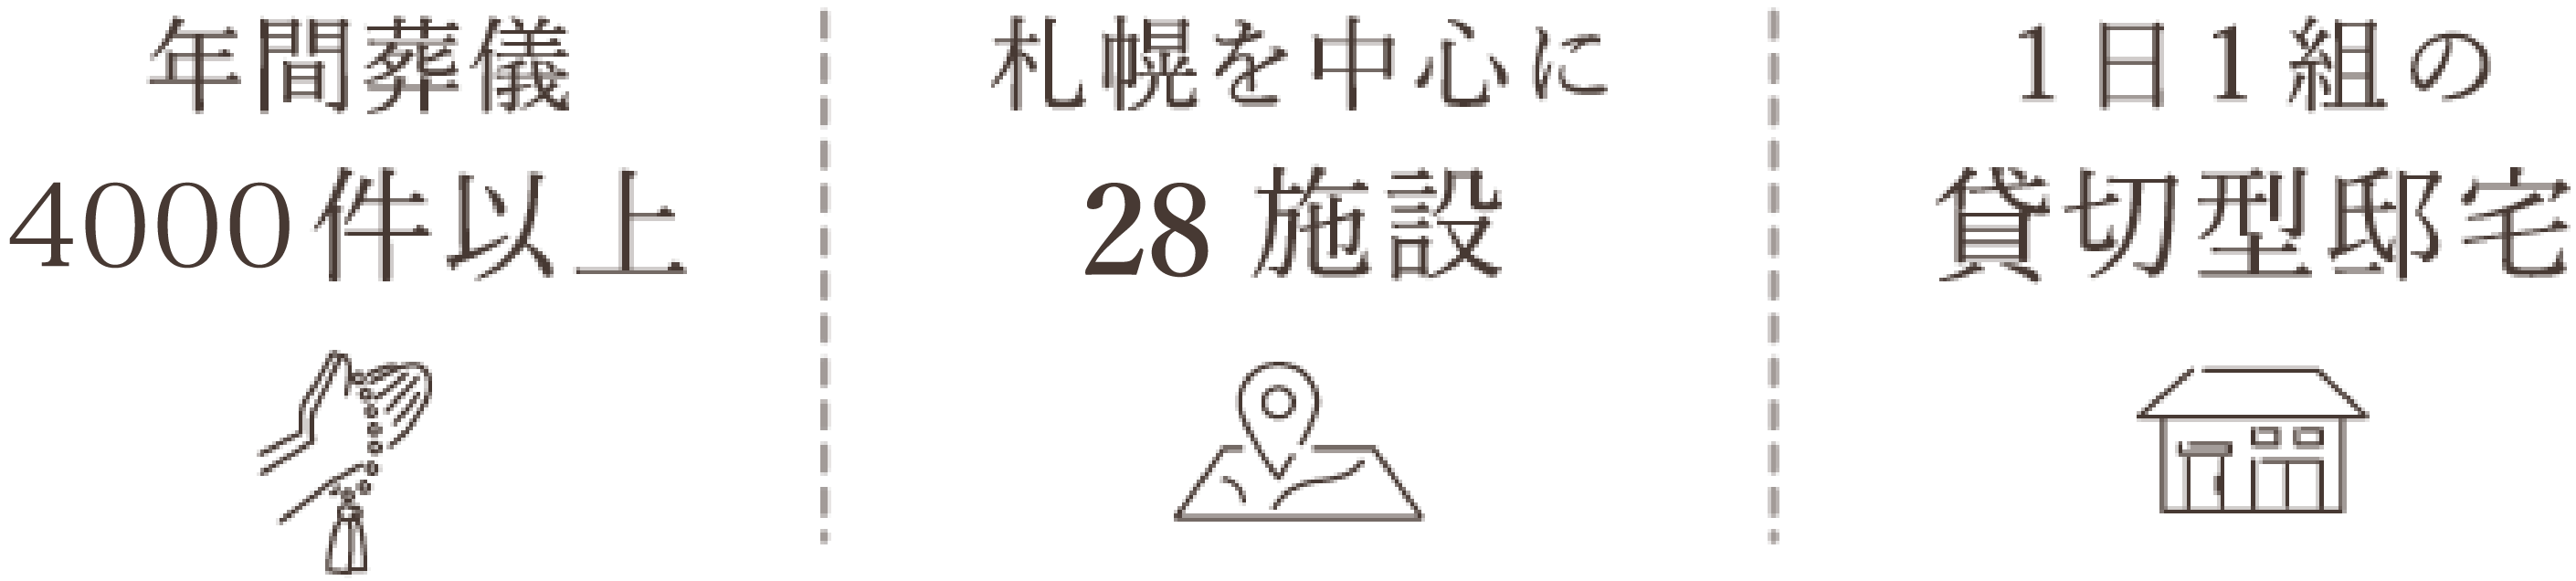 年間葬儀2500件以上・札幌を中心に22施設・1日1組の貸切型邸宅